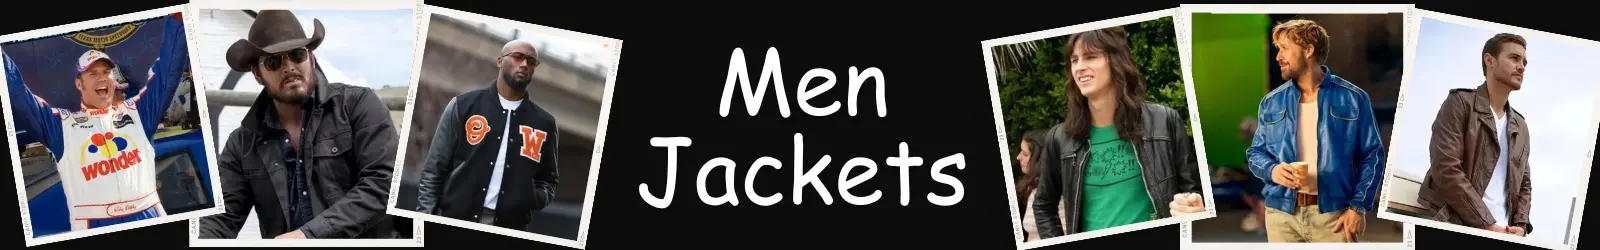 Men Jackets Category Banner